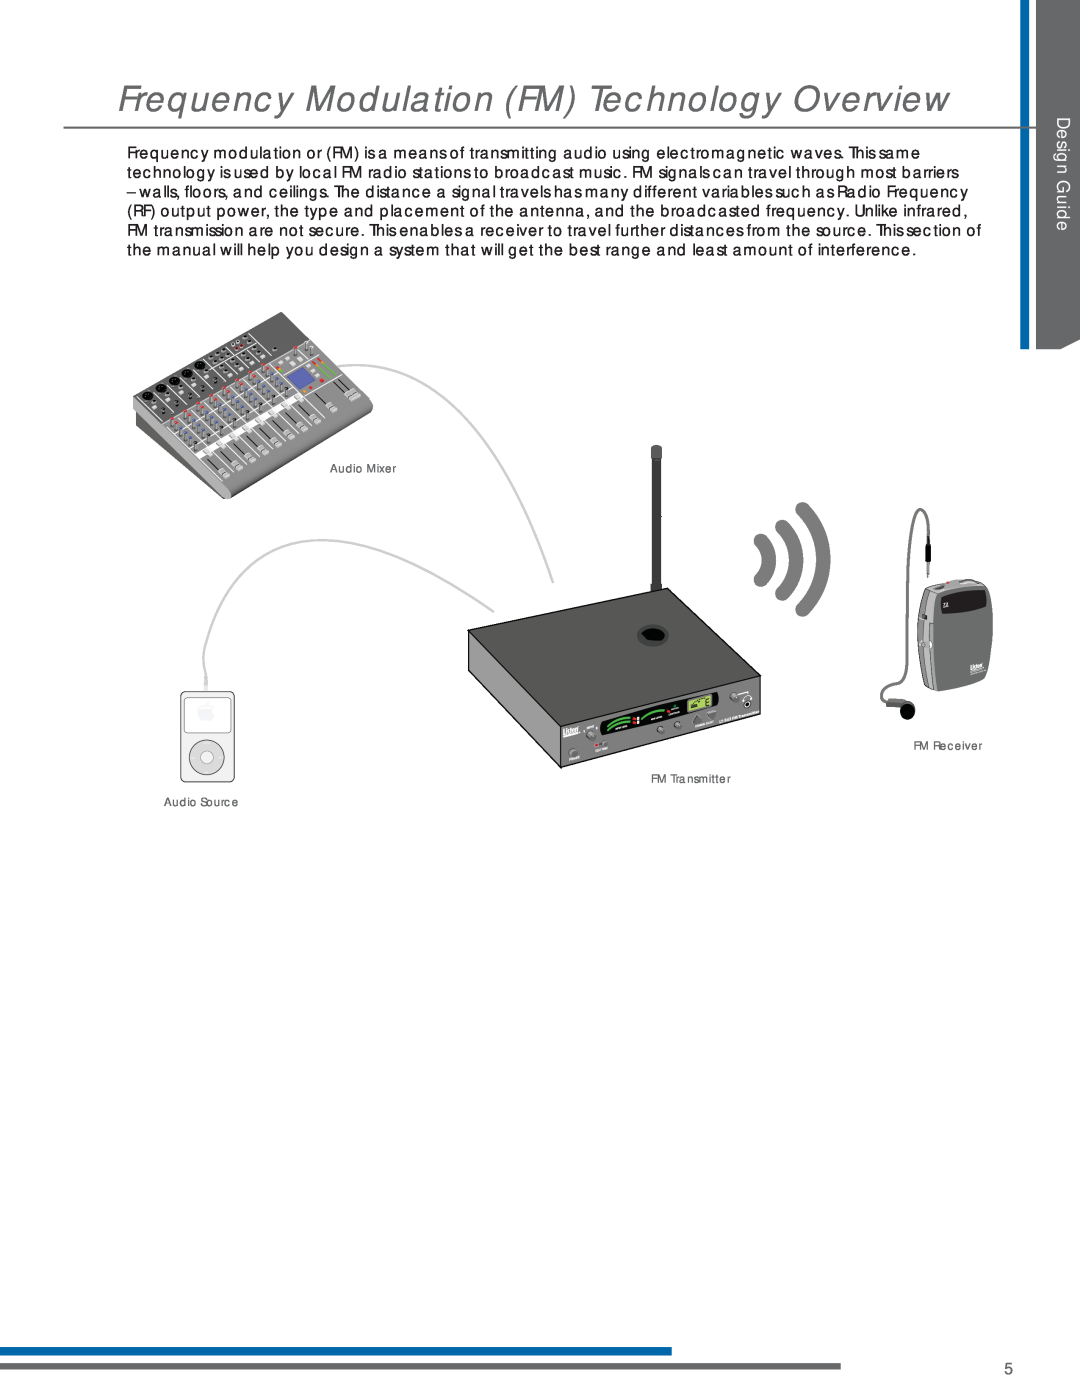 Listen Technologies LR-200-072, LP-3CV-072, LA-161 Frequency Modulation FM Technology Overview, Design Guide, Audio Mixer 